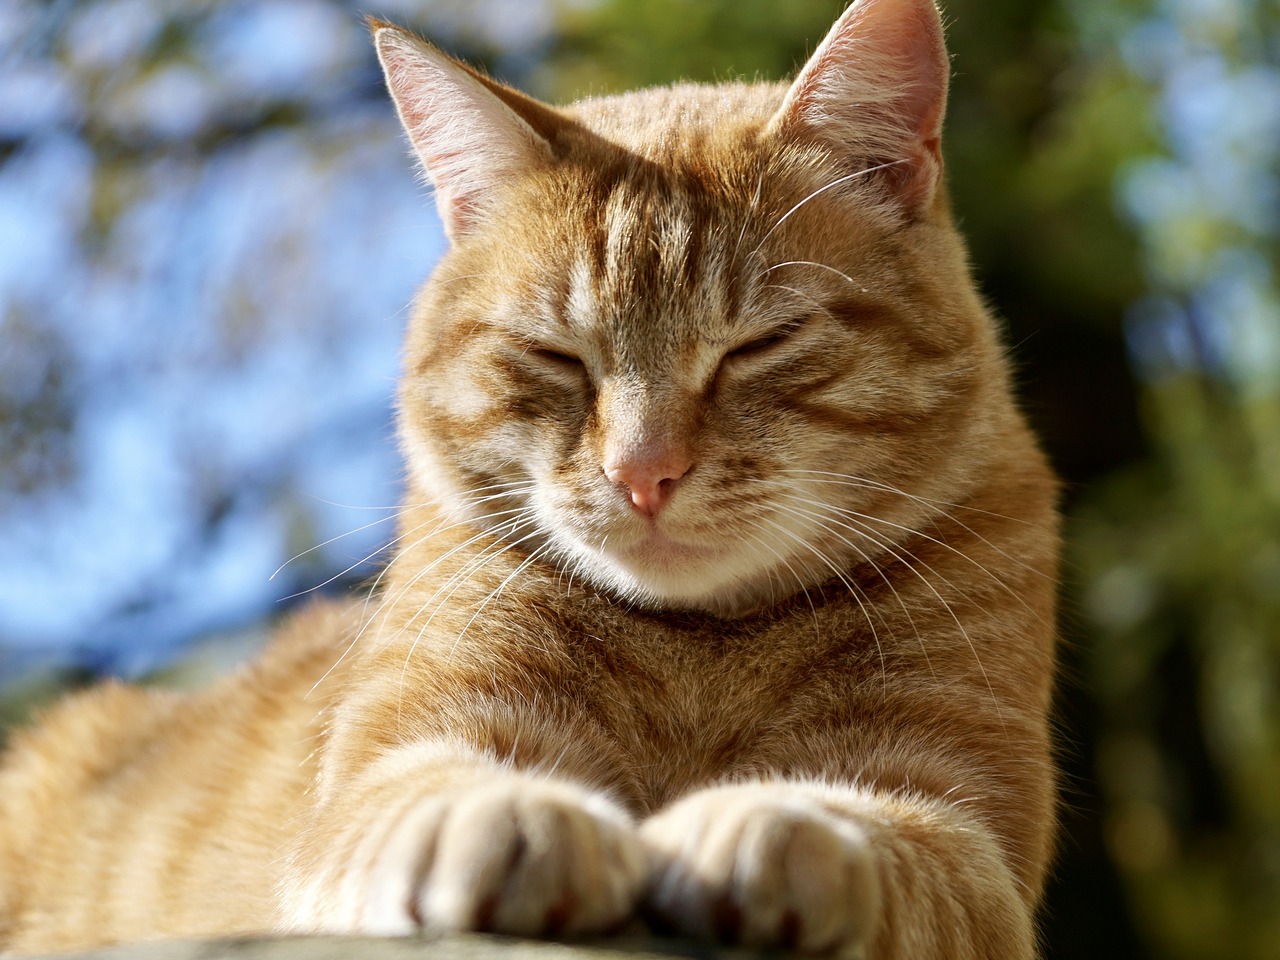 An orange tabby cat.